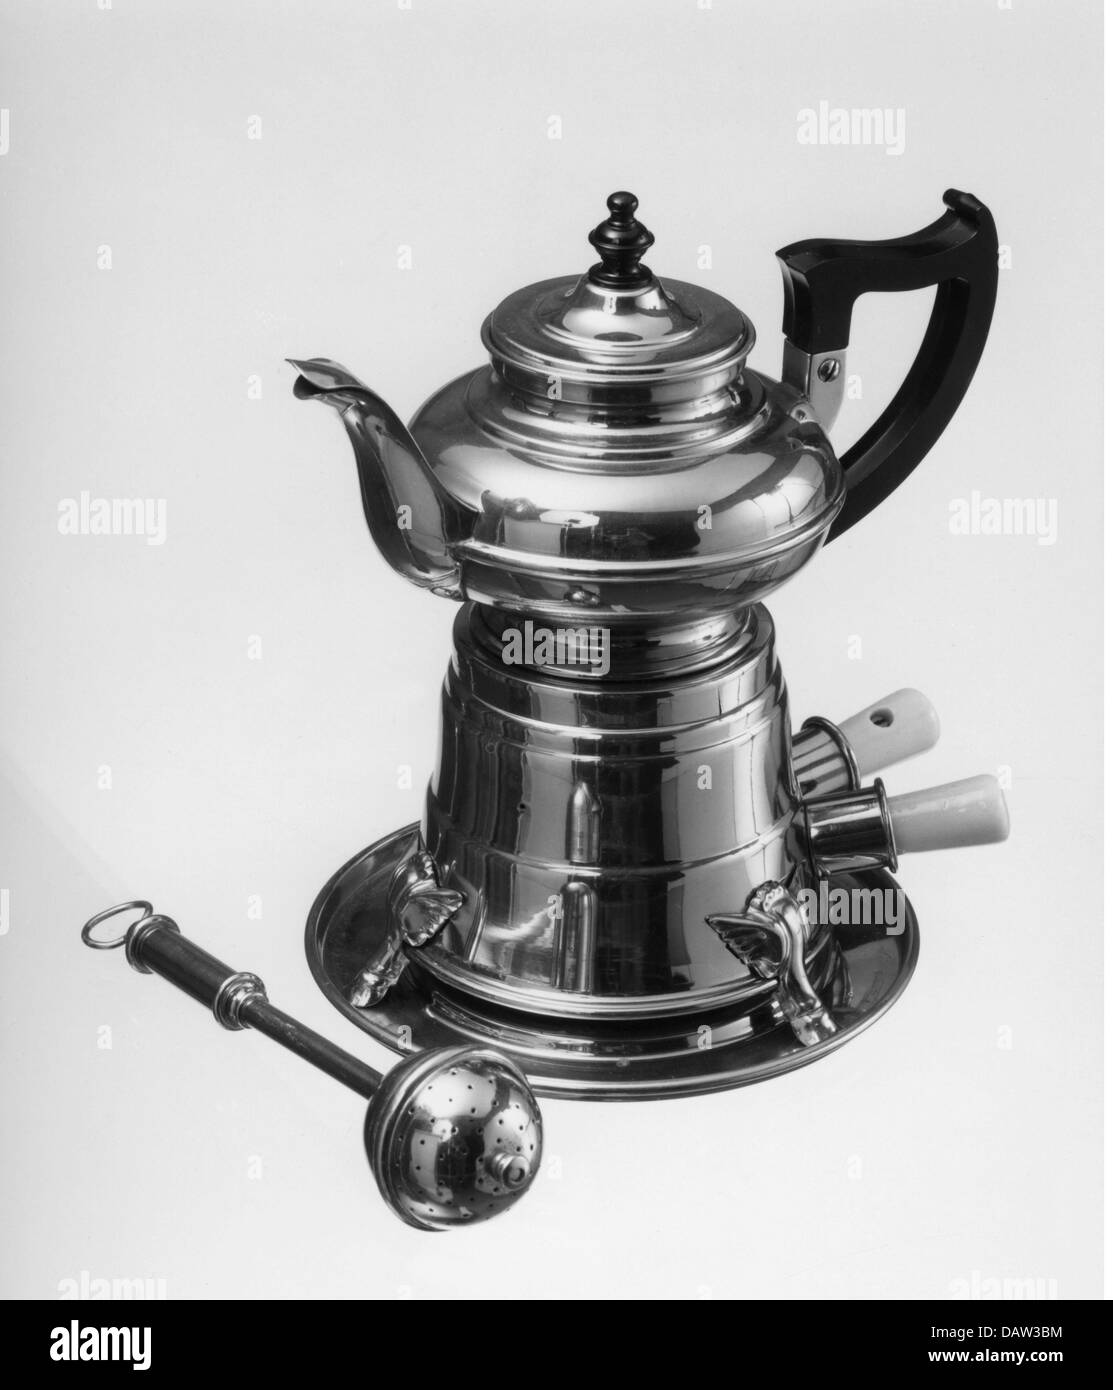 https://c8.alamy.com/comp/DAW3BM/household-kitchen-and-kitchenware-tea-urn-circa-1922-additional-rights-DAW3BM.jpg